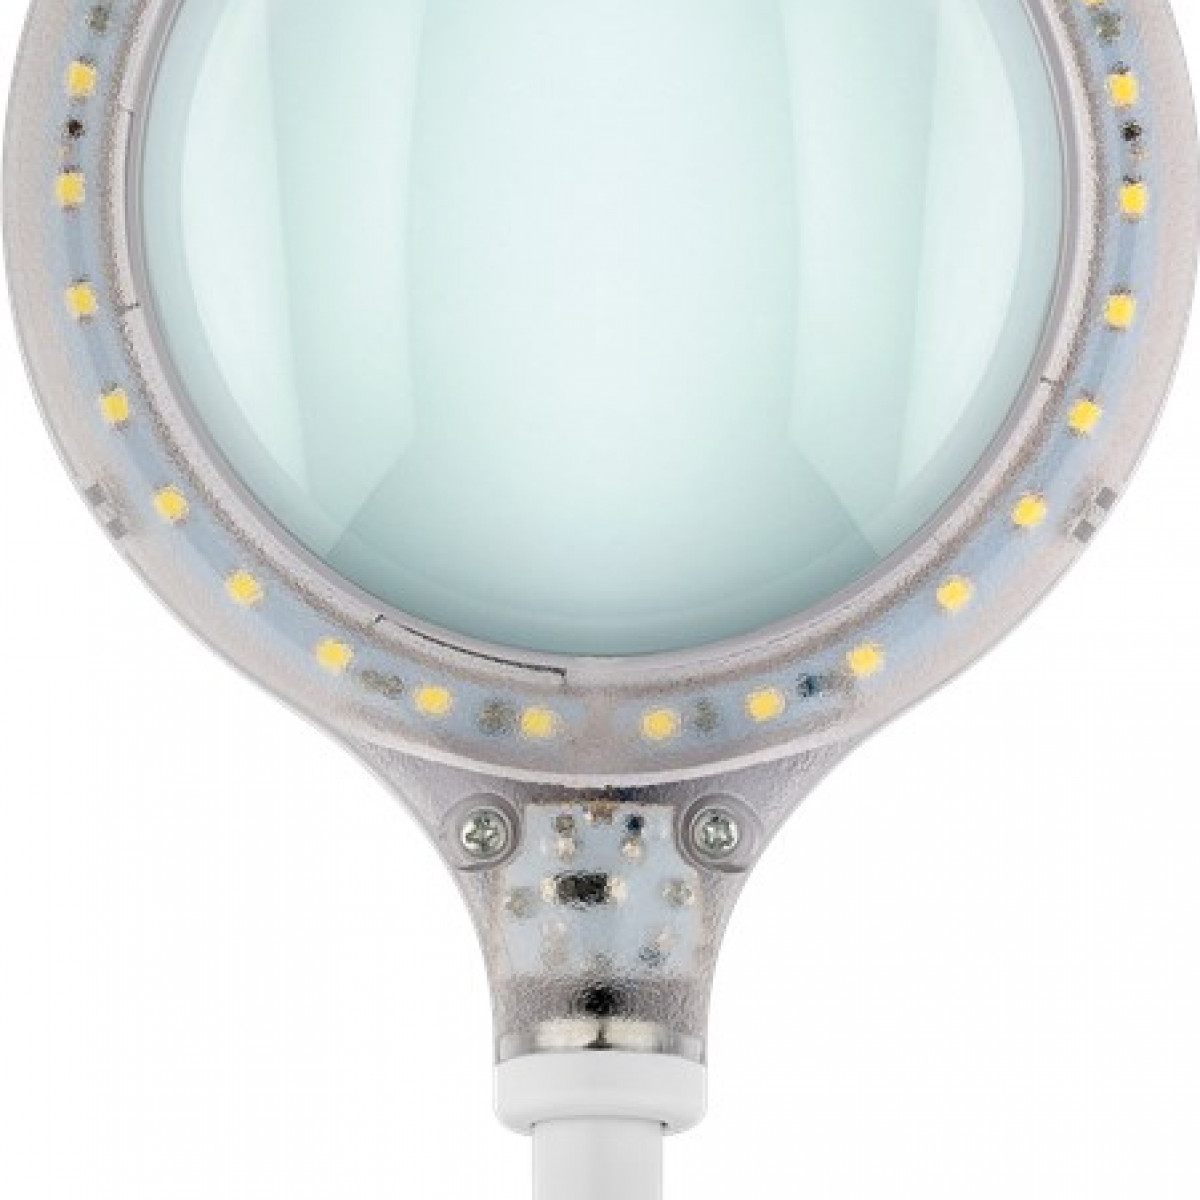 GOOBAY LED-Klemm-Lupenleuchte, 6 W, weiß Weiß LED-Lampe